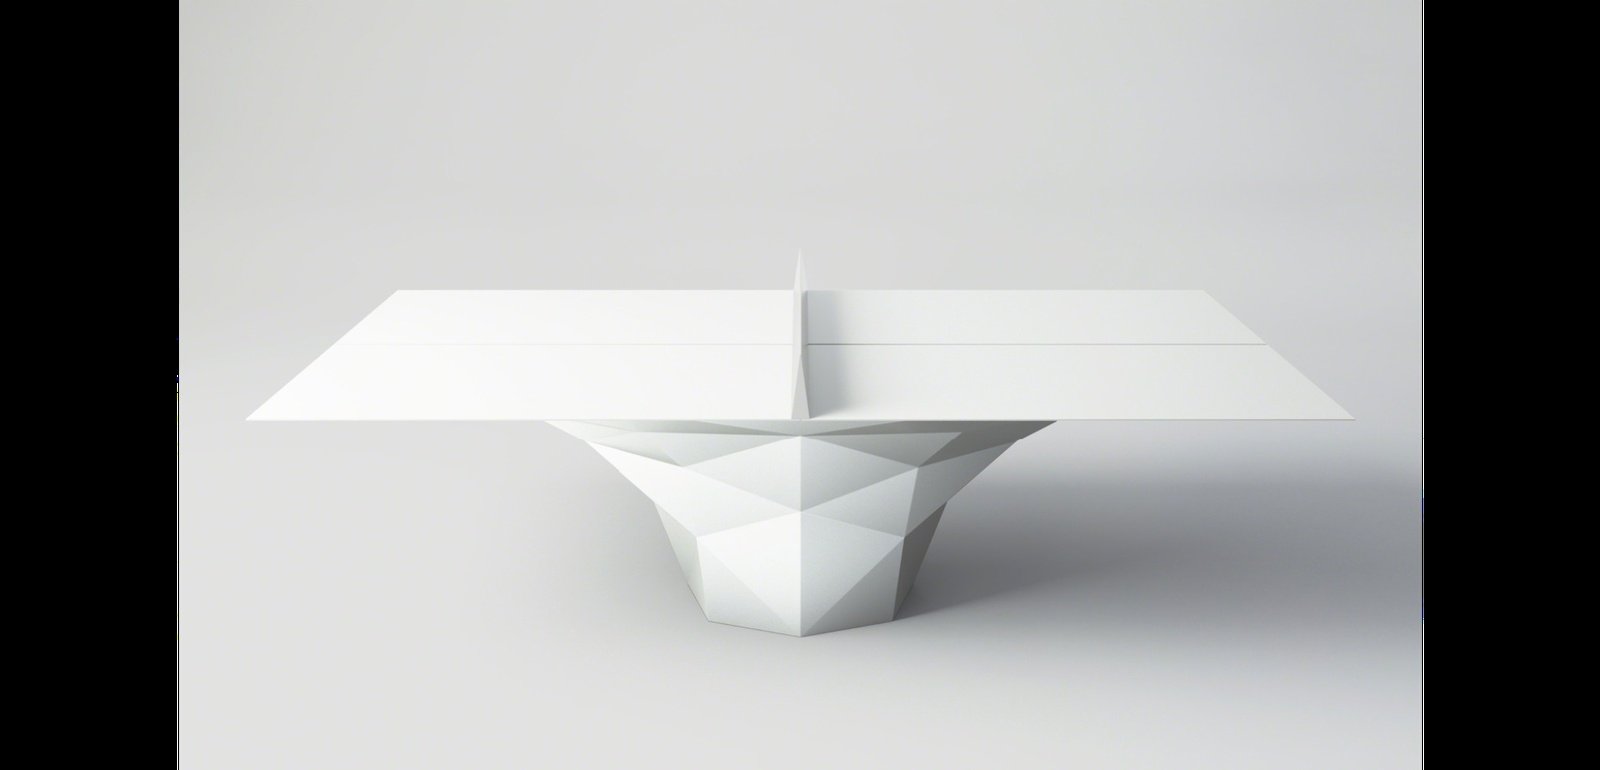 Elegant table design by Janne Kyttanen, source: Artsy